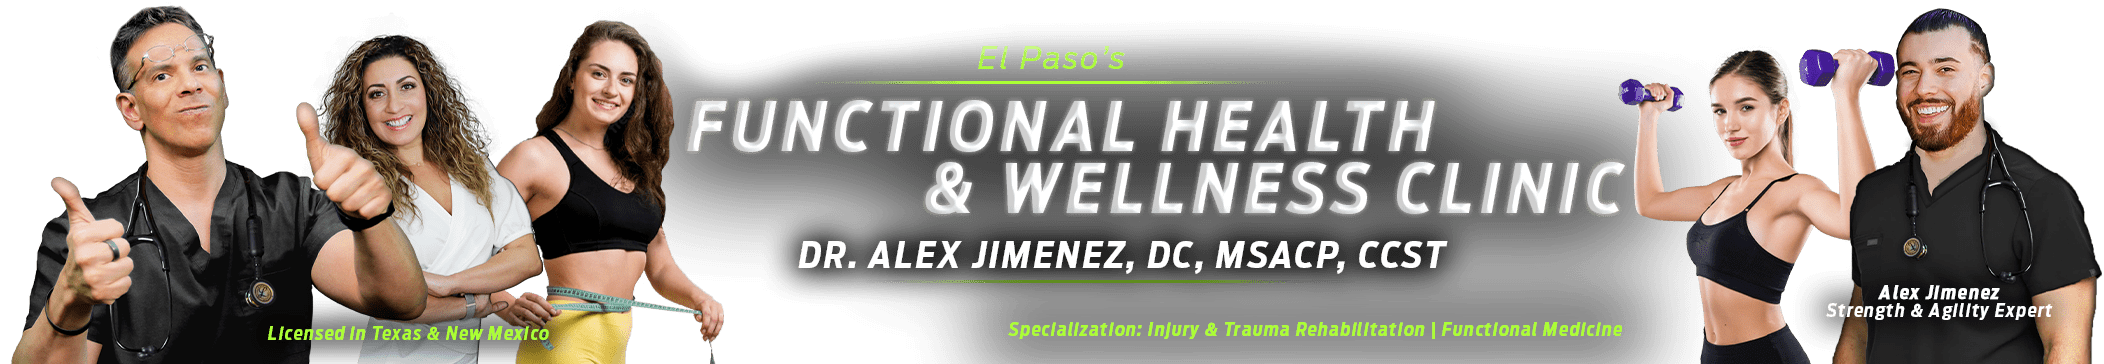 EP Wellness & Functional Medicine Clinic